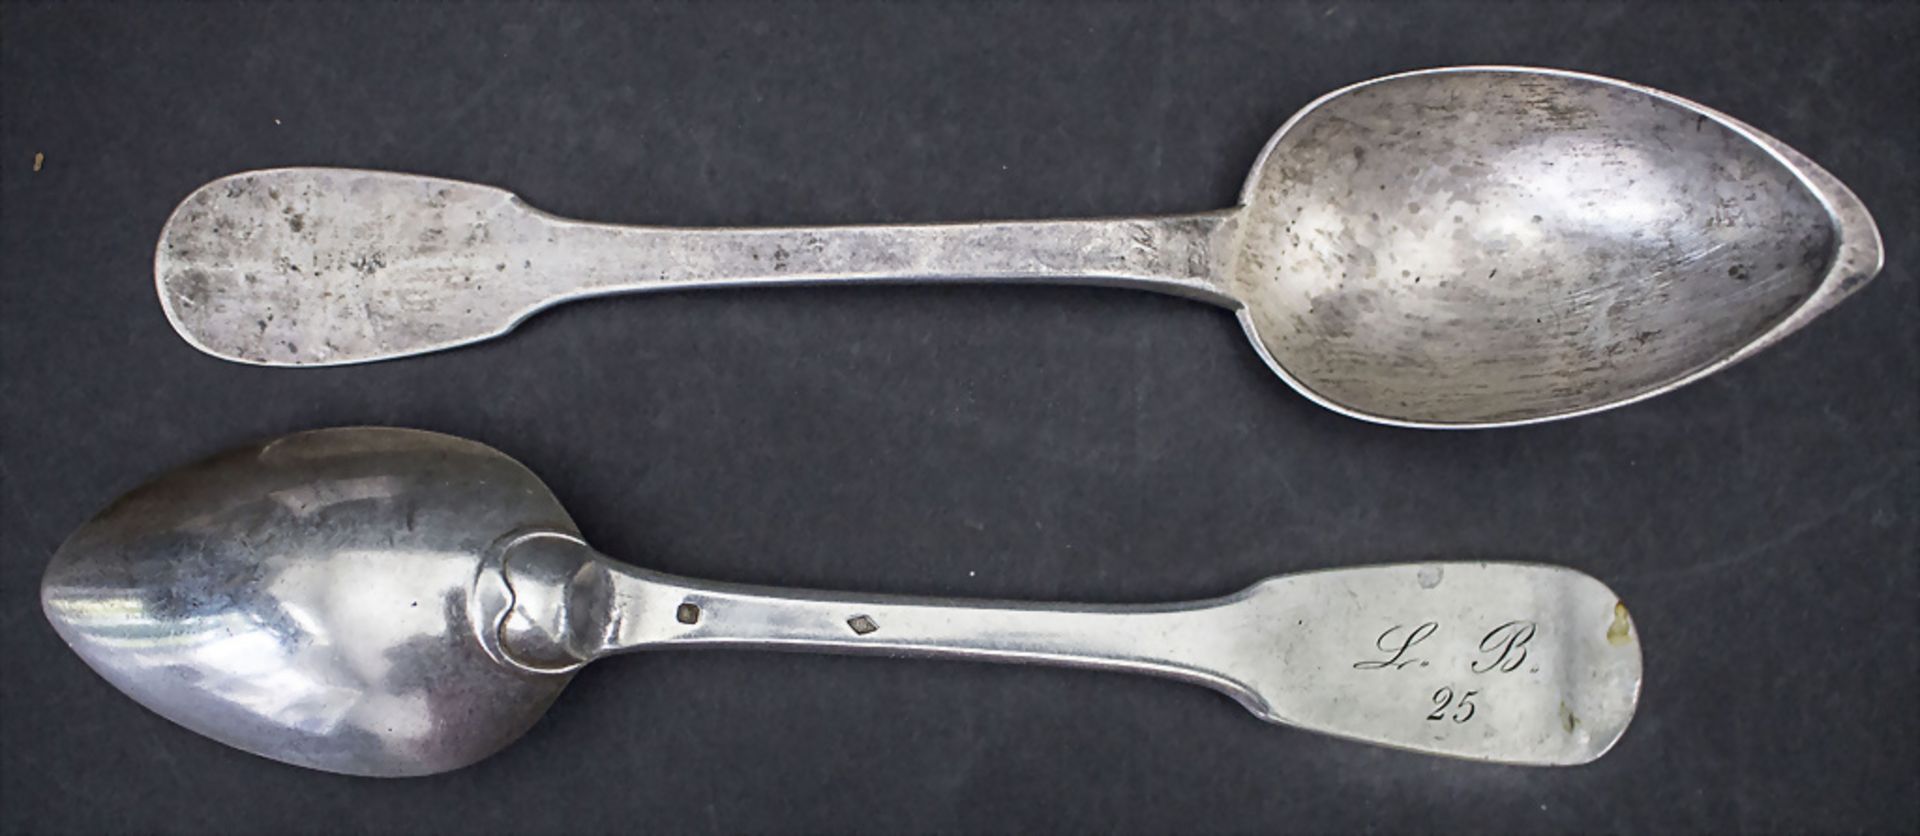 12-tlg. Silberbesteck / A 12-piece set of silver cutlery, Paris, nach 1839 - Image 3 of 7